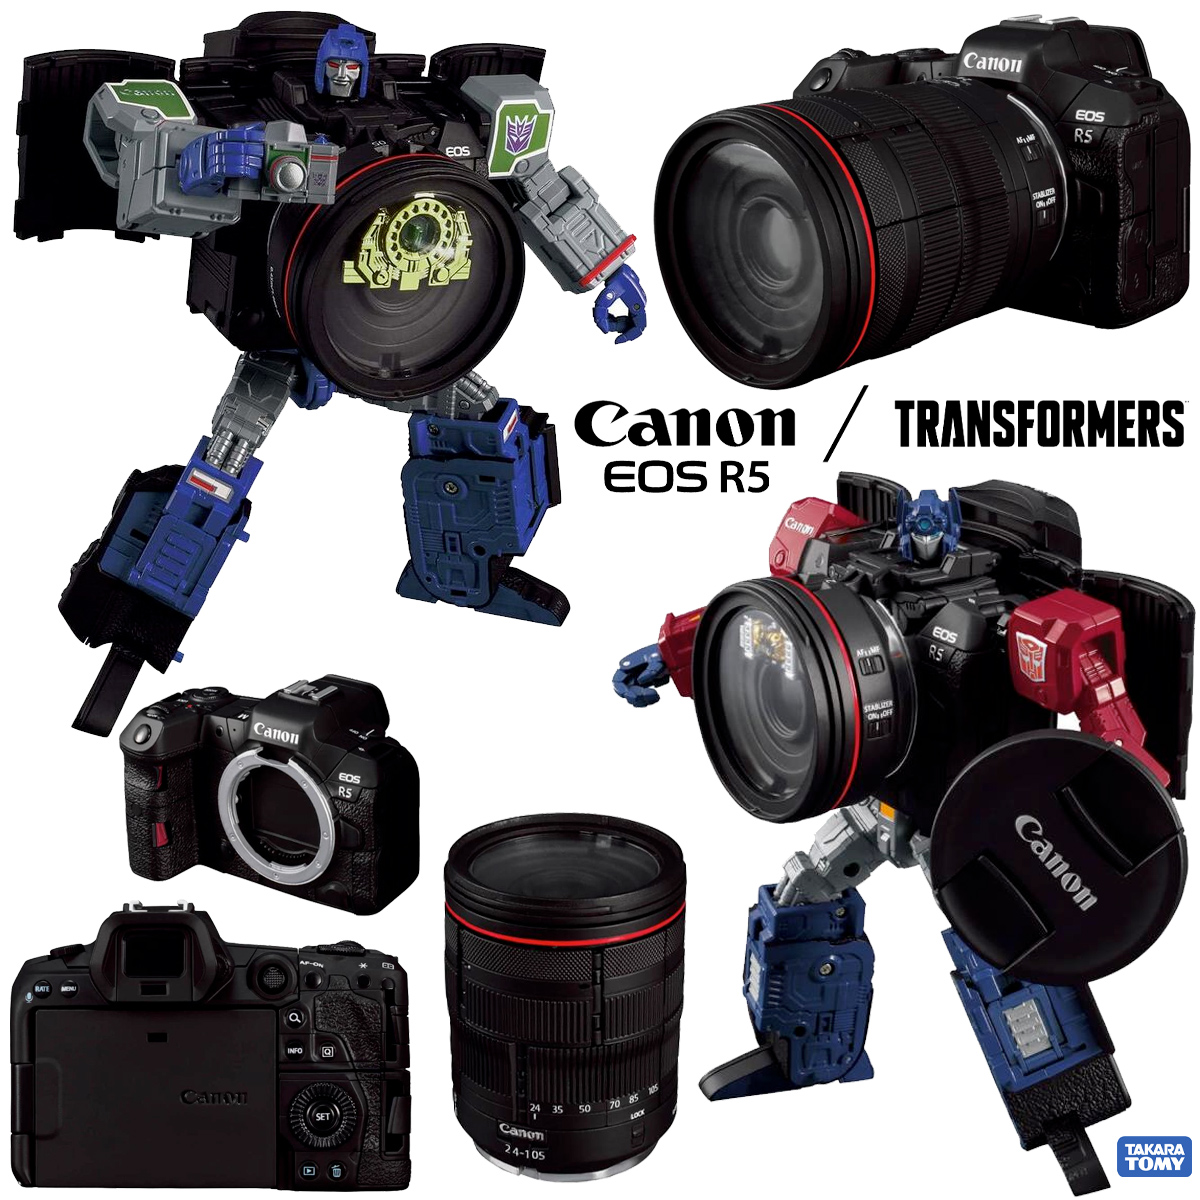 Transformers x Canon EOS R5: Optimus Prime e Decepticon Refraktor